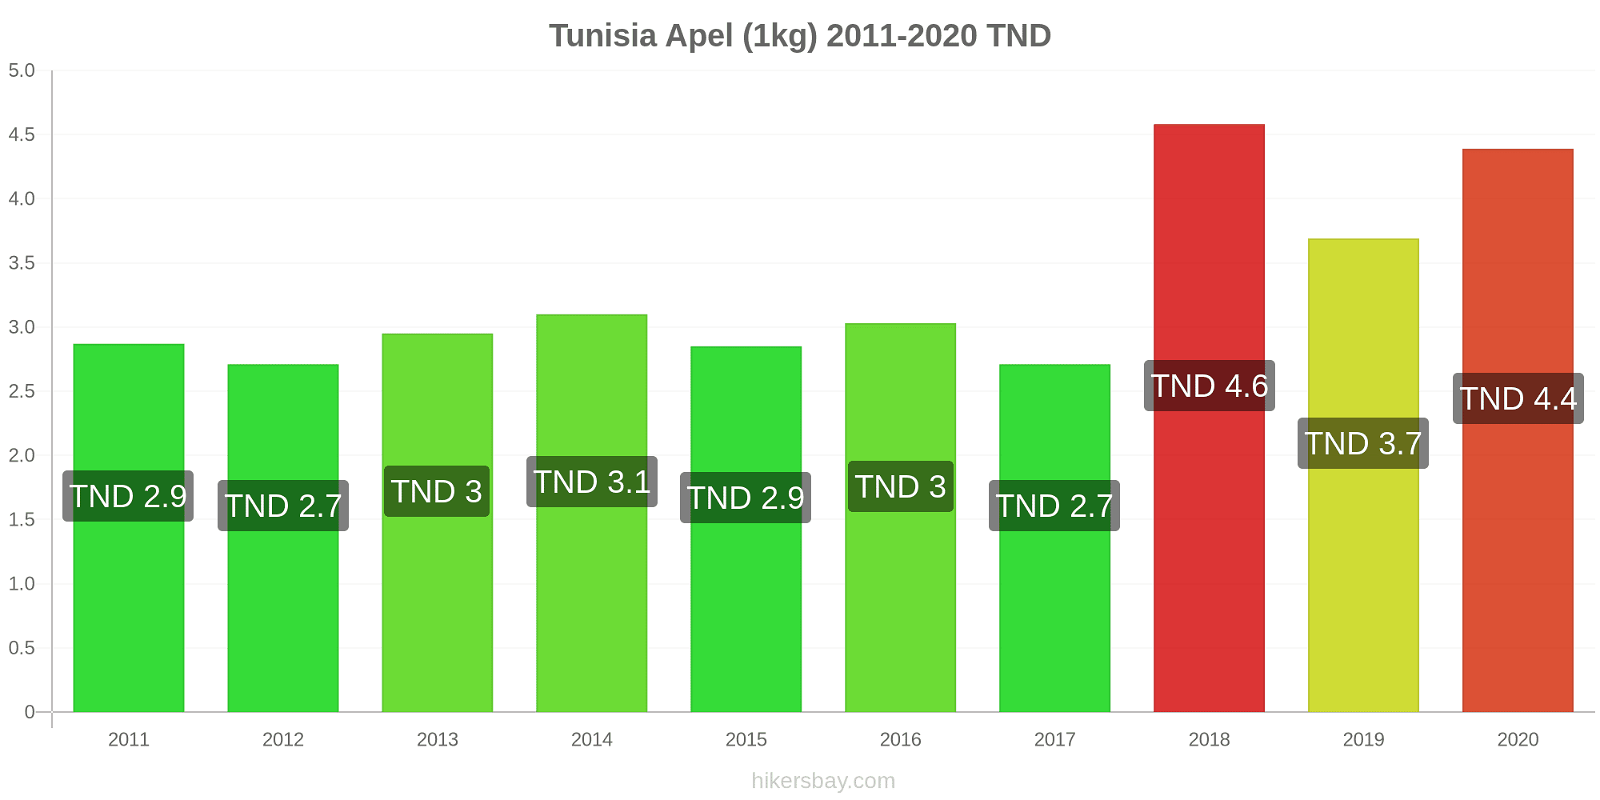 Tunisia perubahan harga Apel (1kg) hikersbay.com